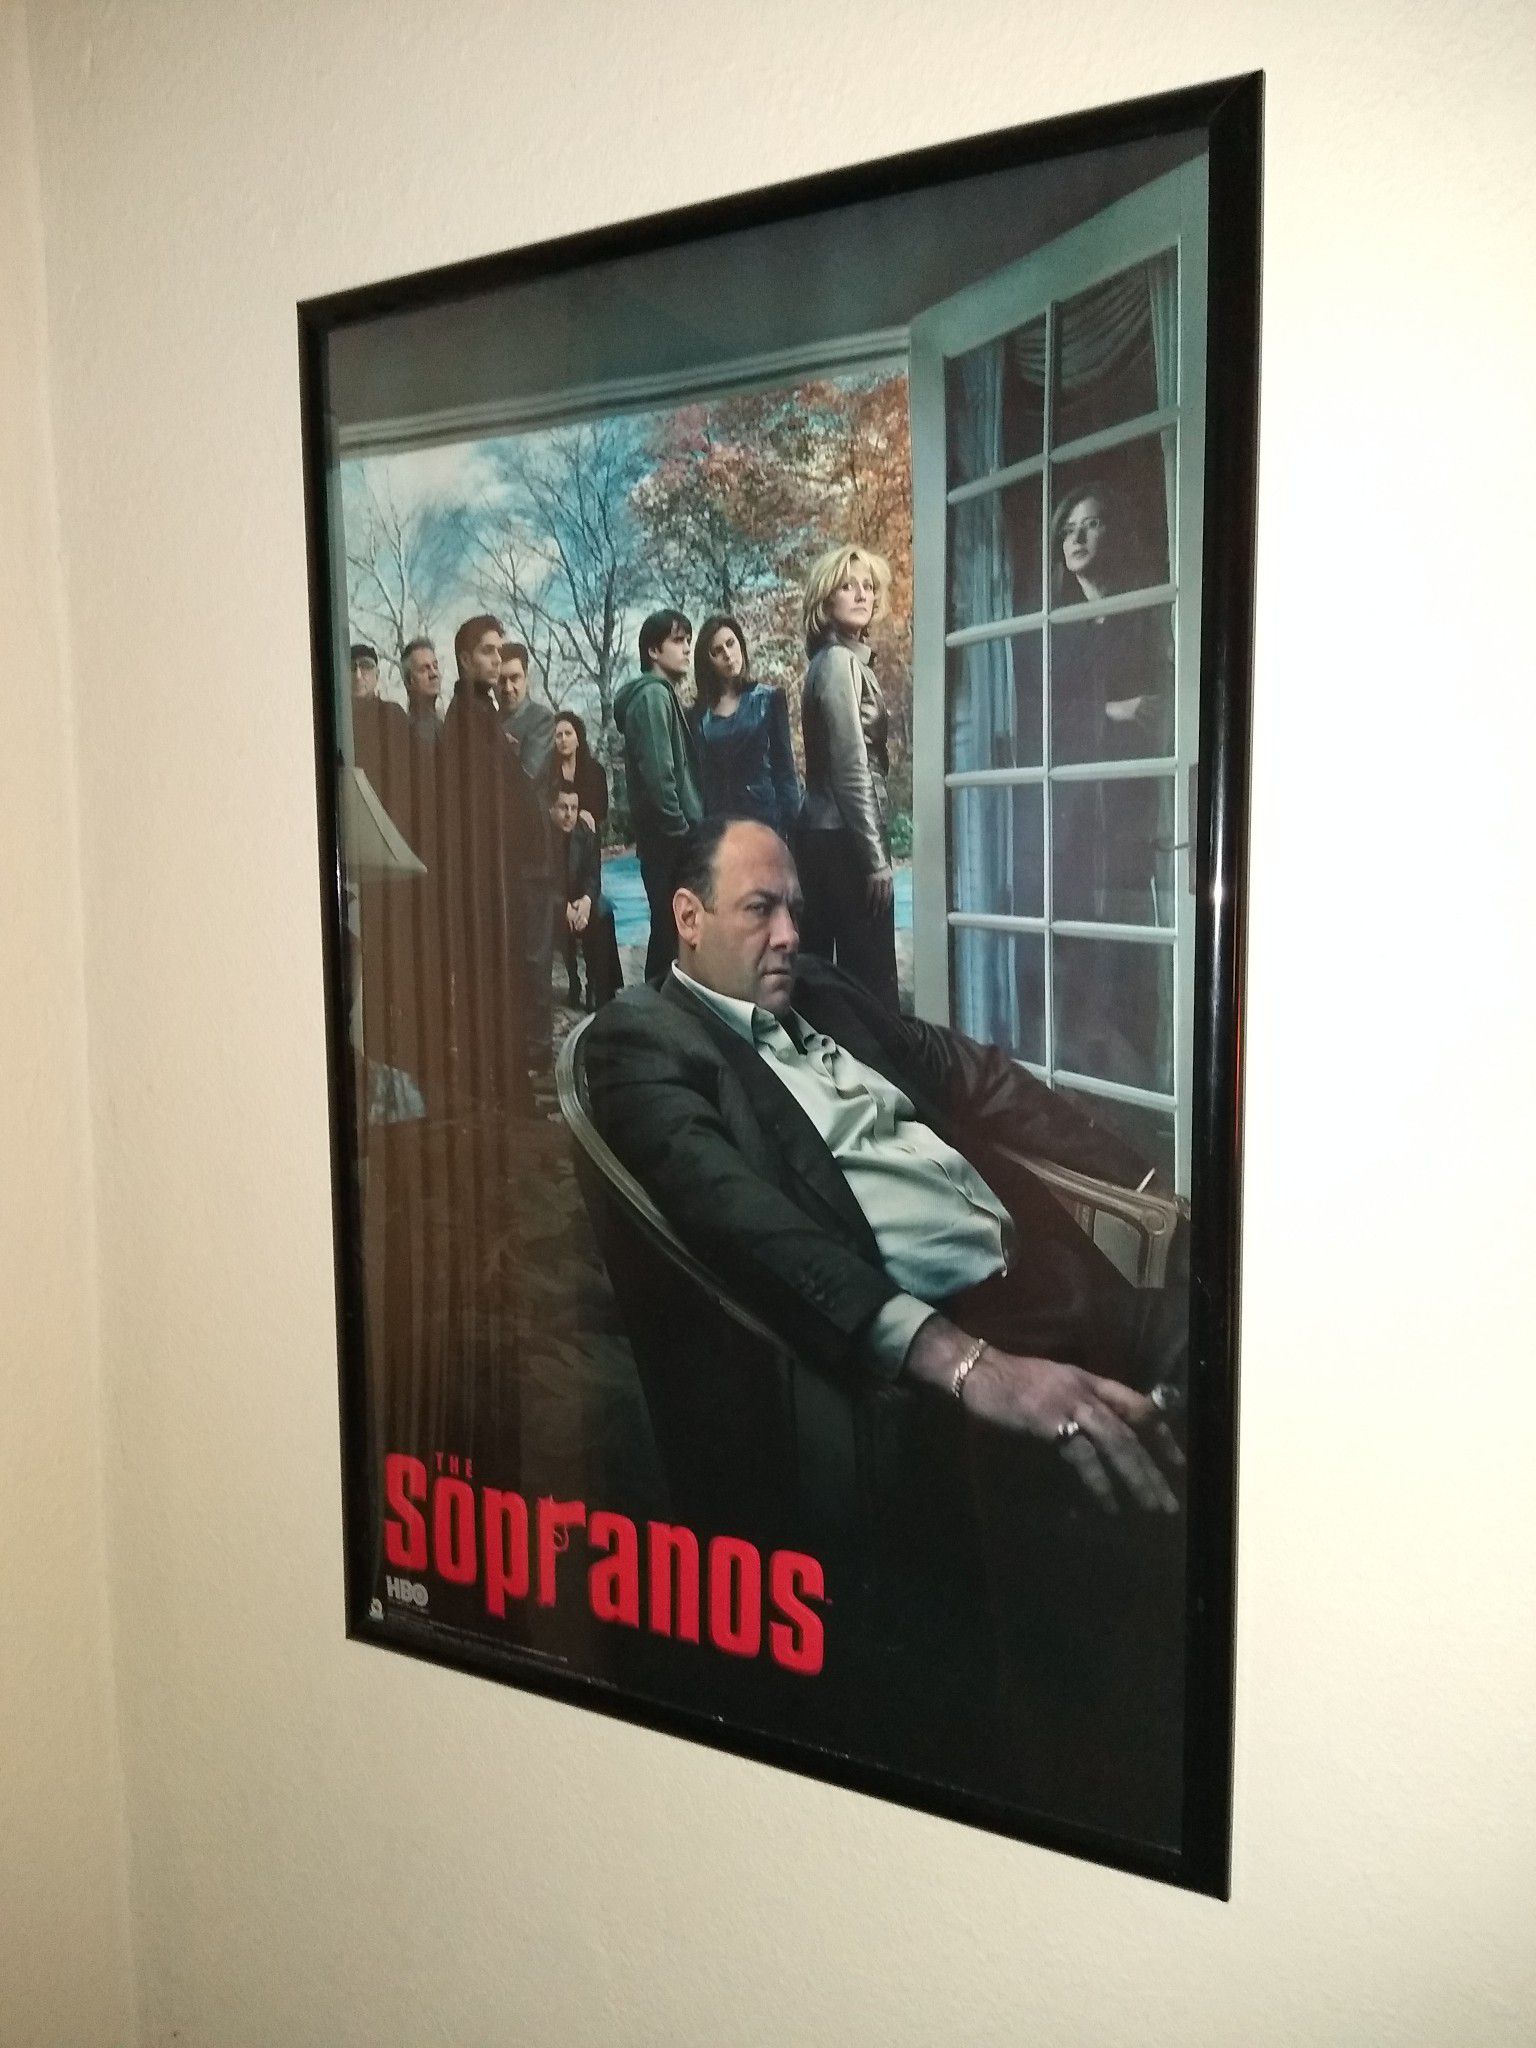 Sopranos poster and frame